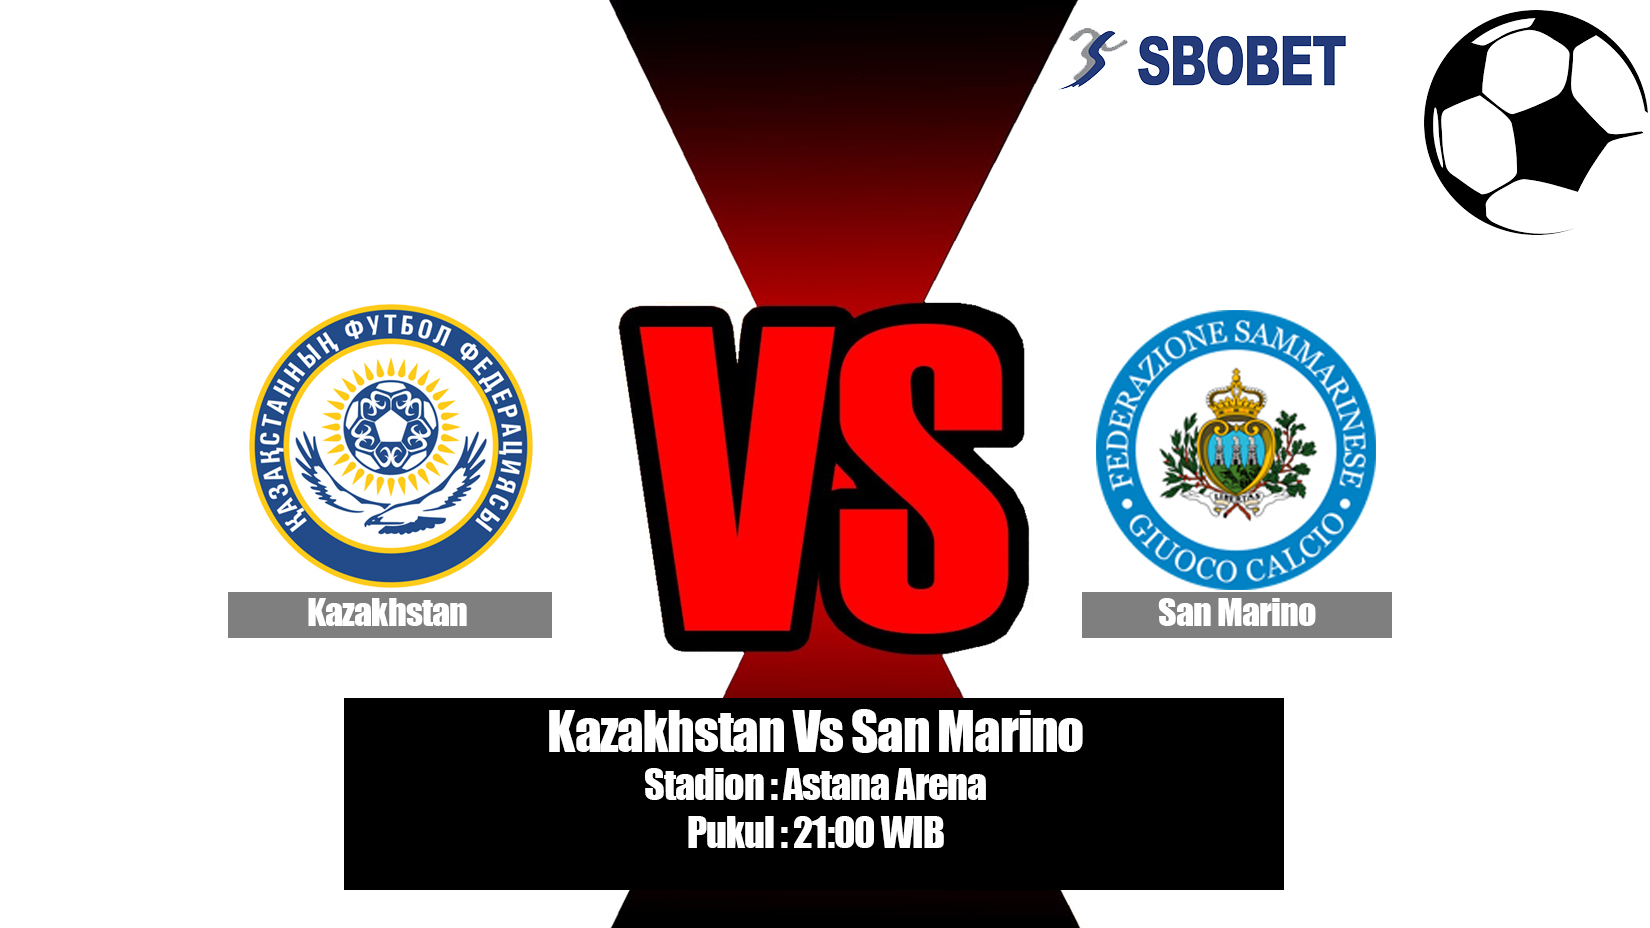 Prediksi Bola Kazakhstan Vs San Marino 11 Juni 2019